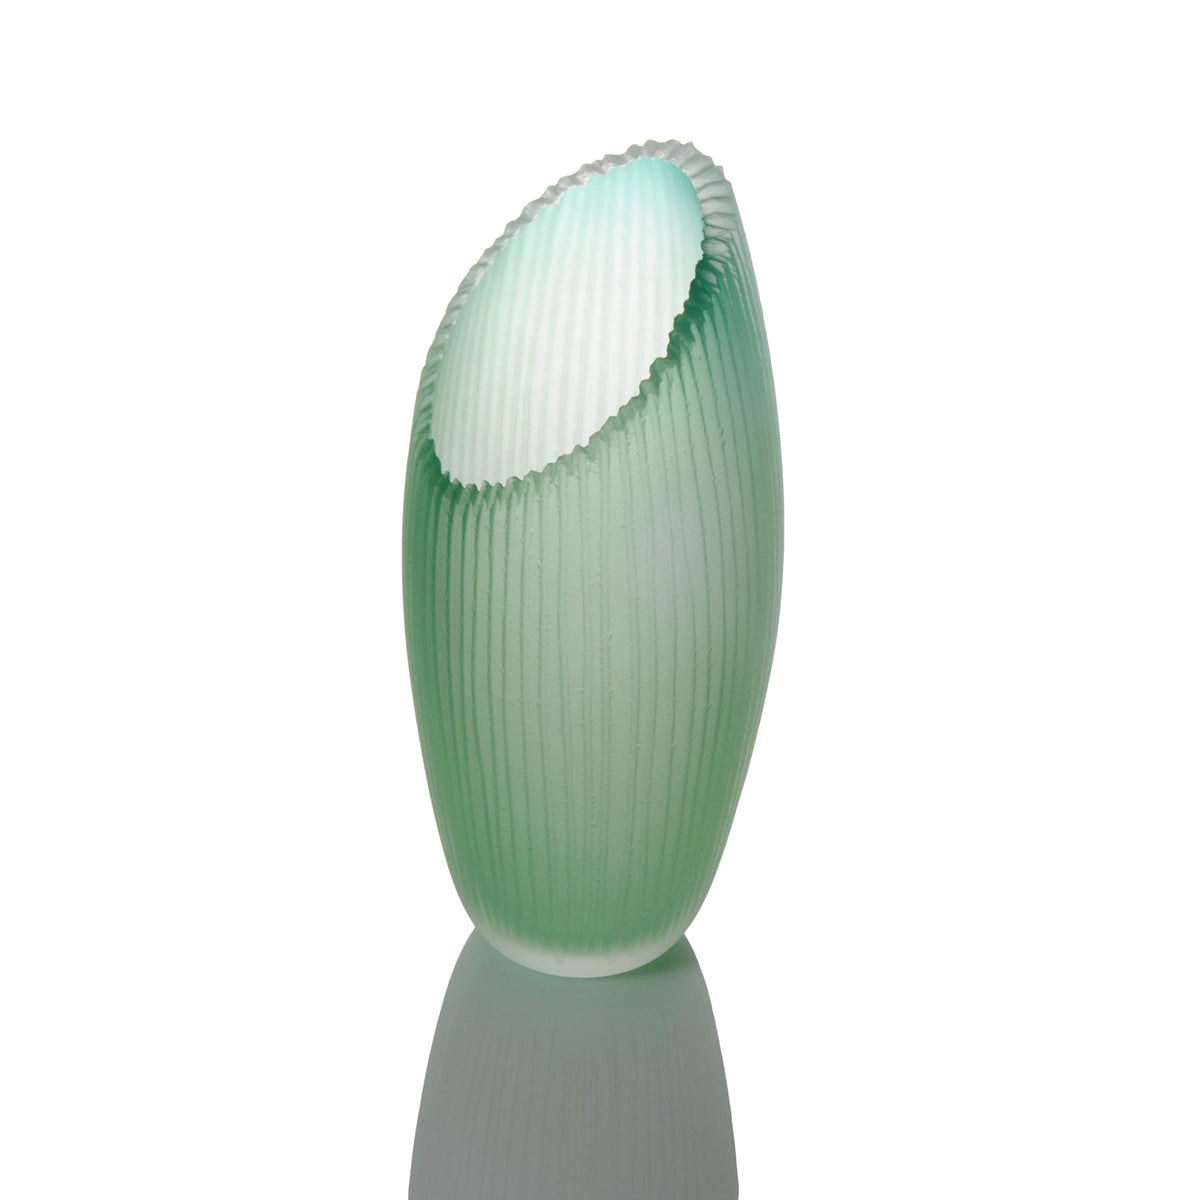 Courtney Downman - green peak vase